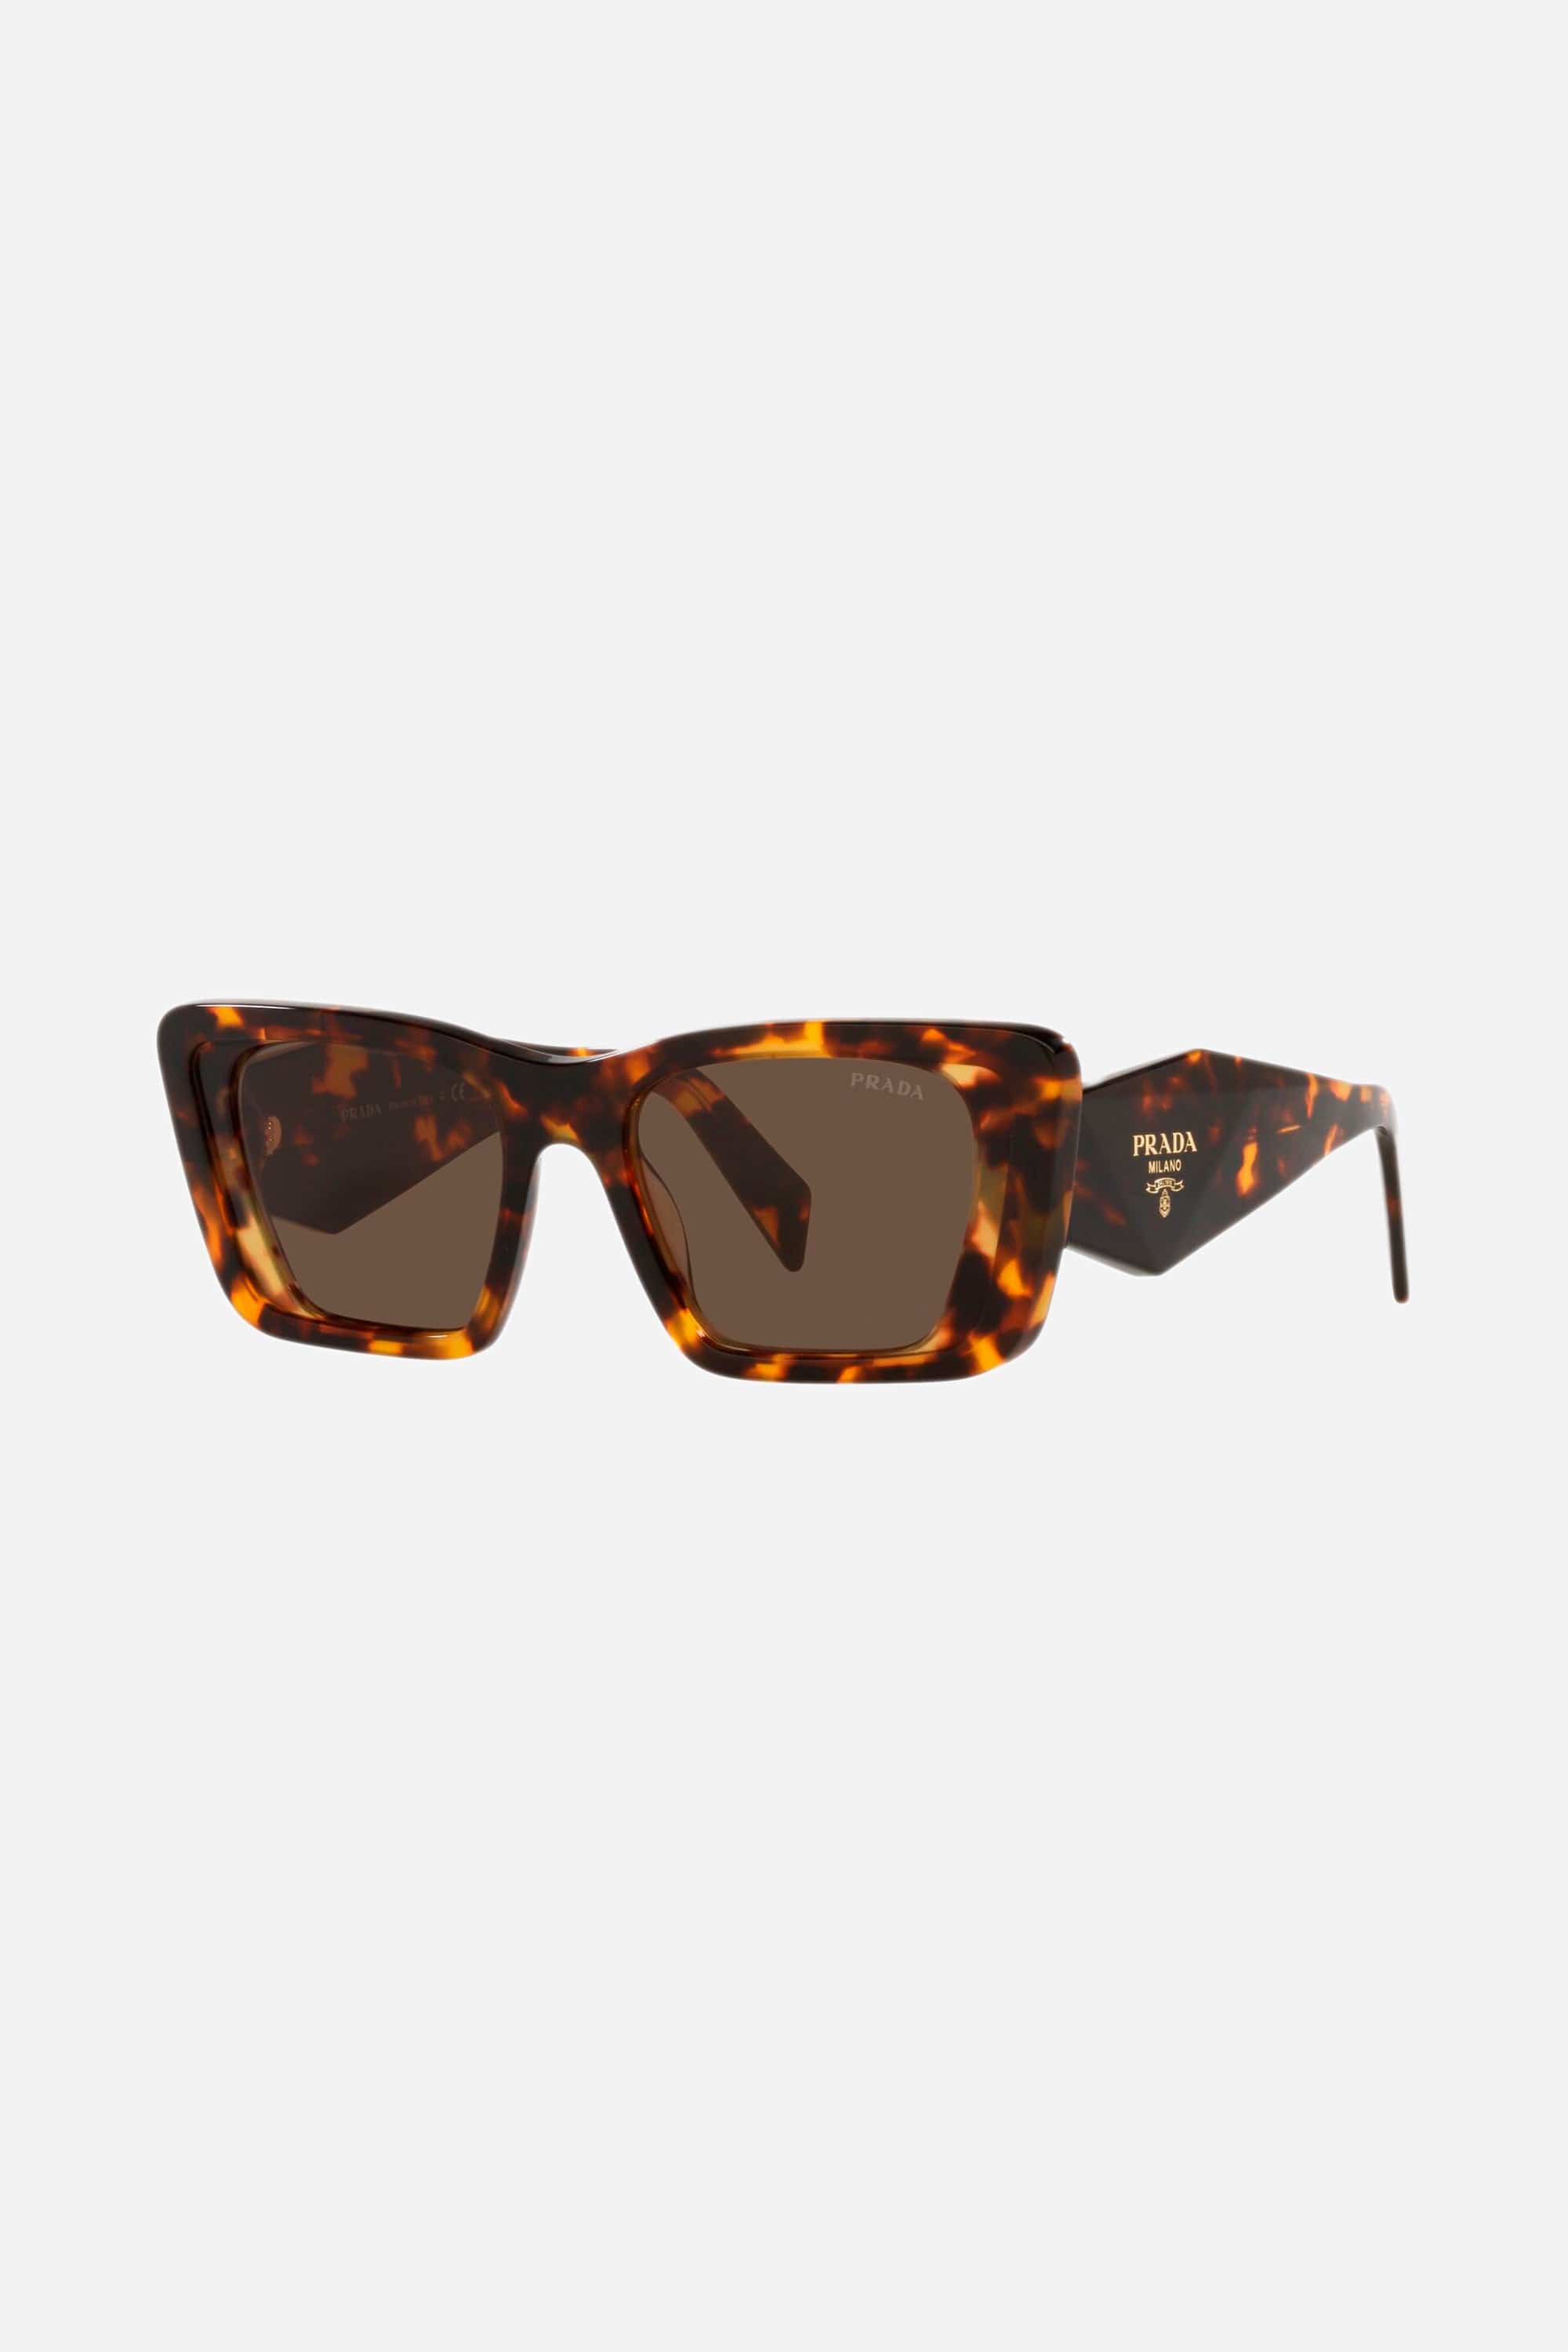 Prada cat-eye black sunglasses - Eyewear Club